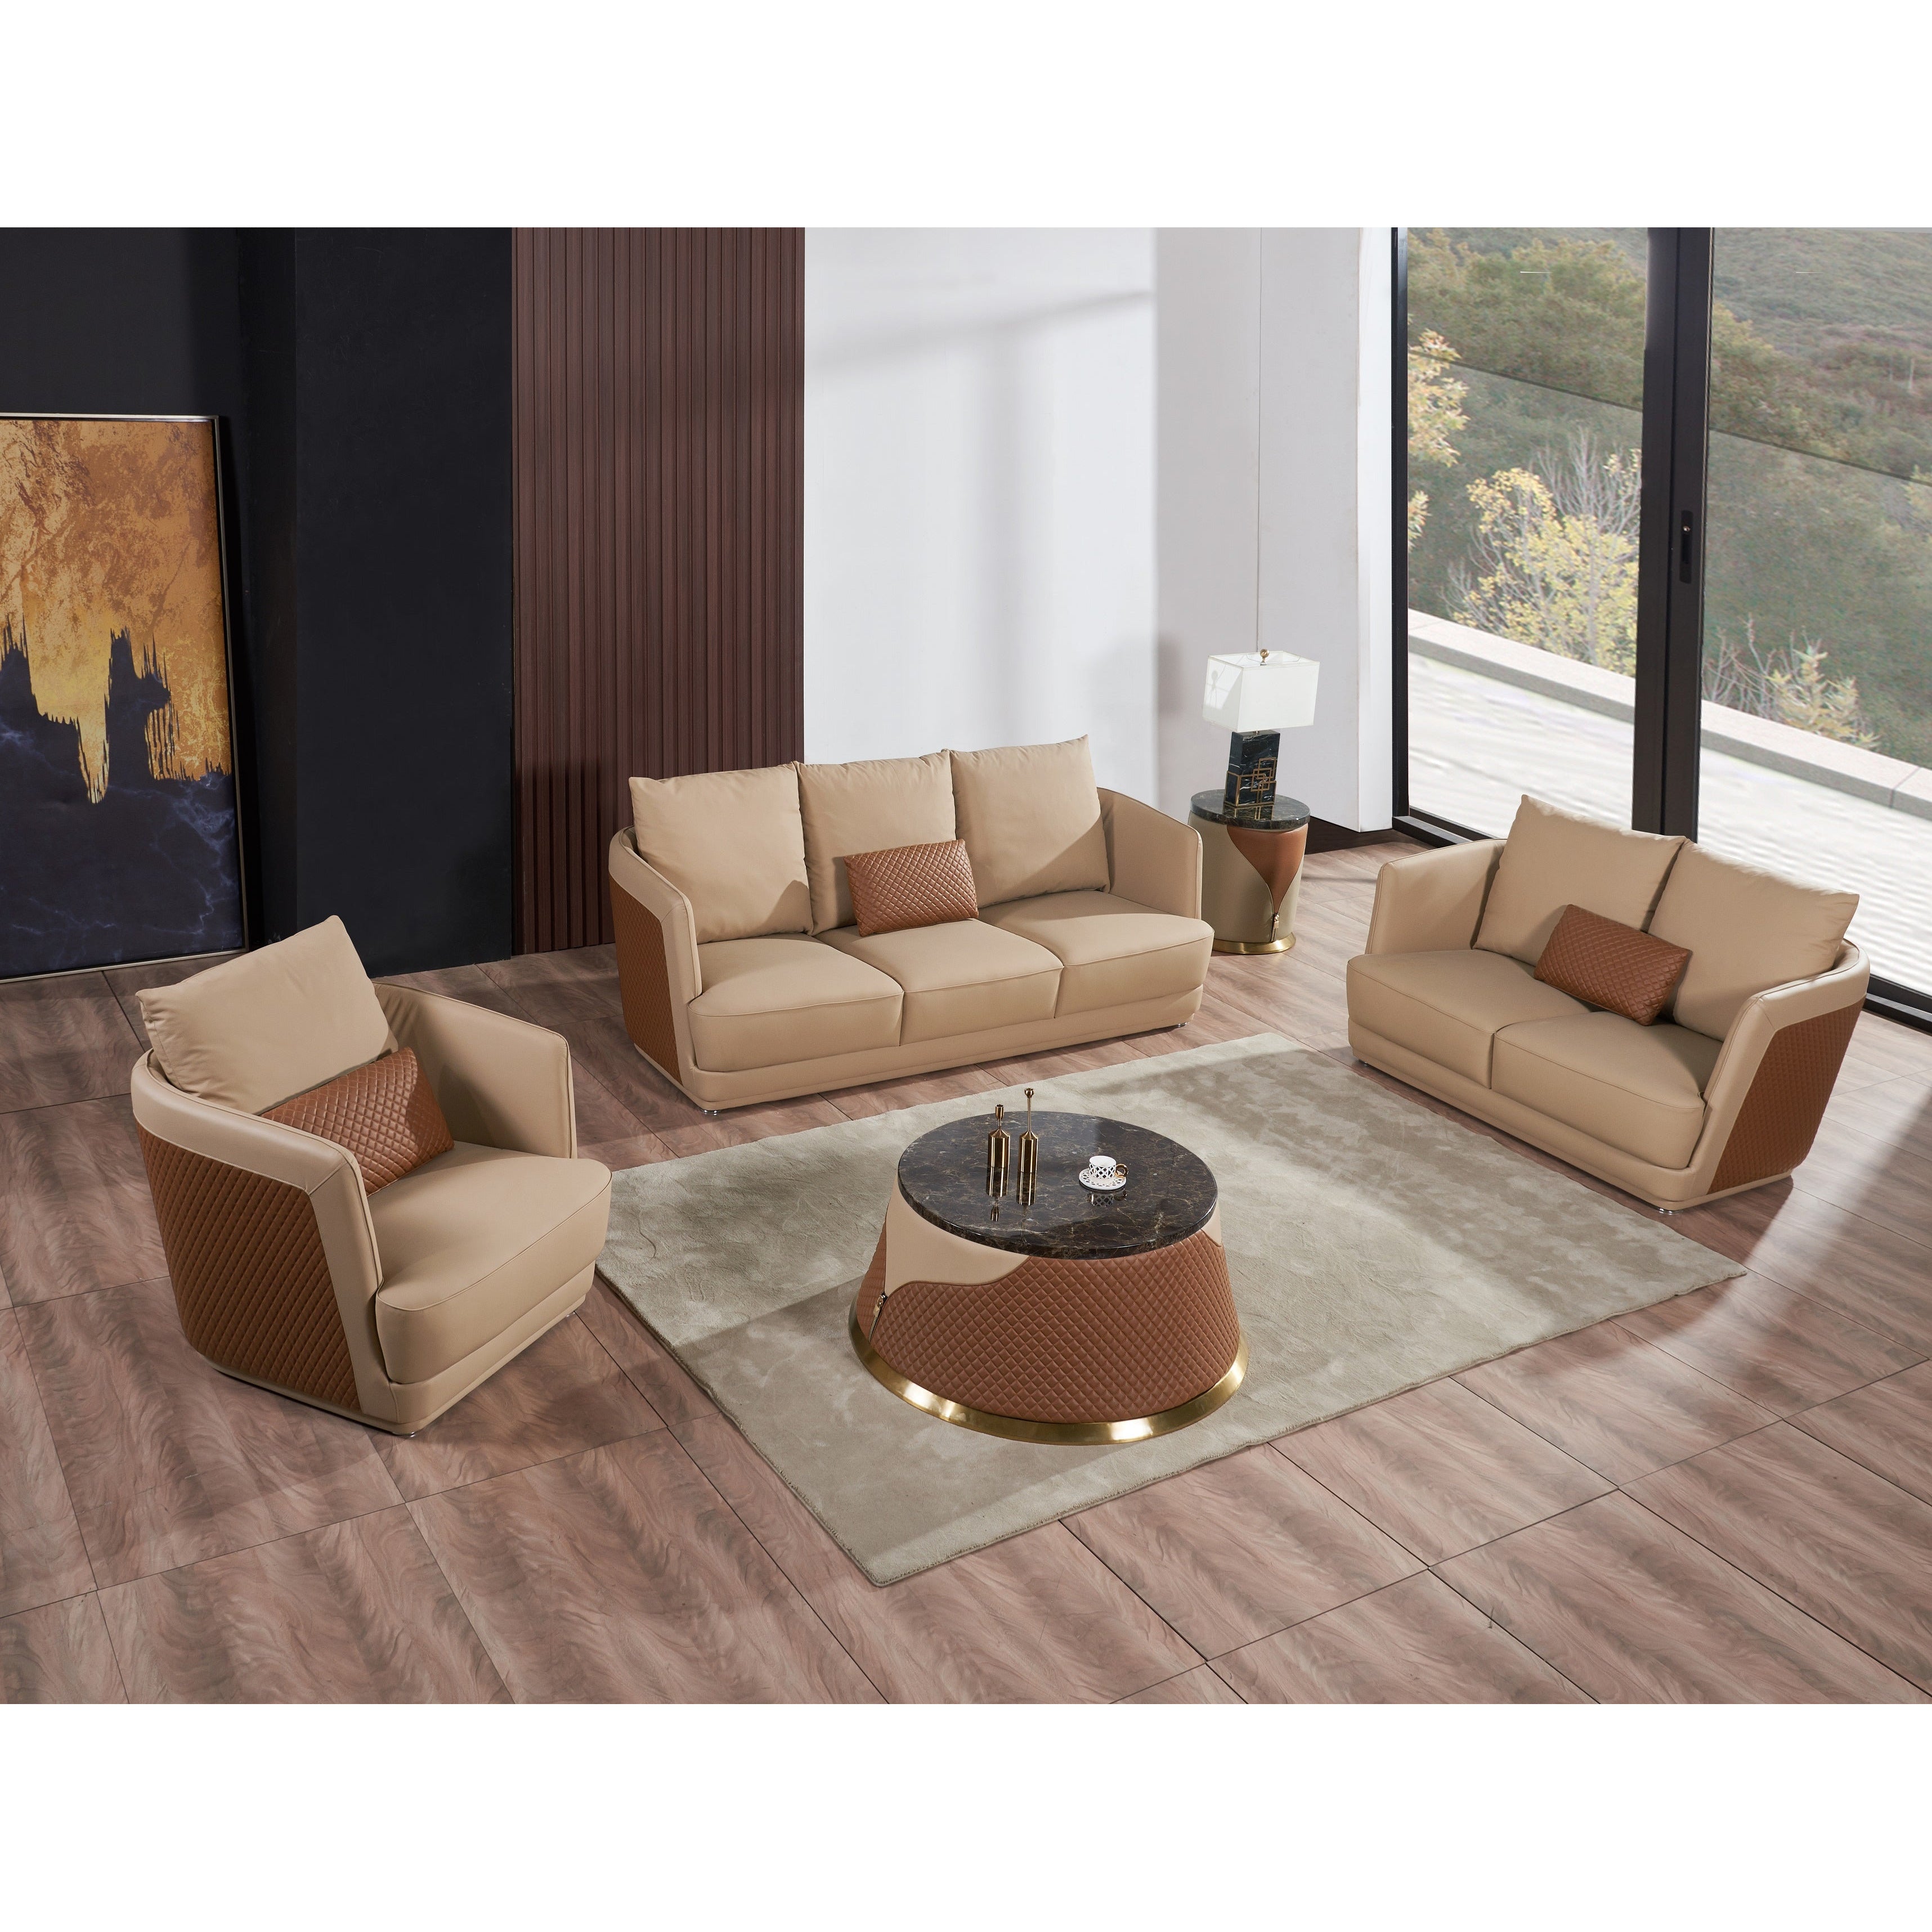 European Furniture - Glamour Chair Tan & Brown Italian Leather - EF-51617-C - New Star Living